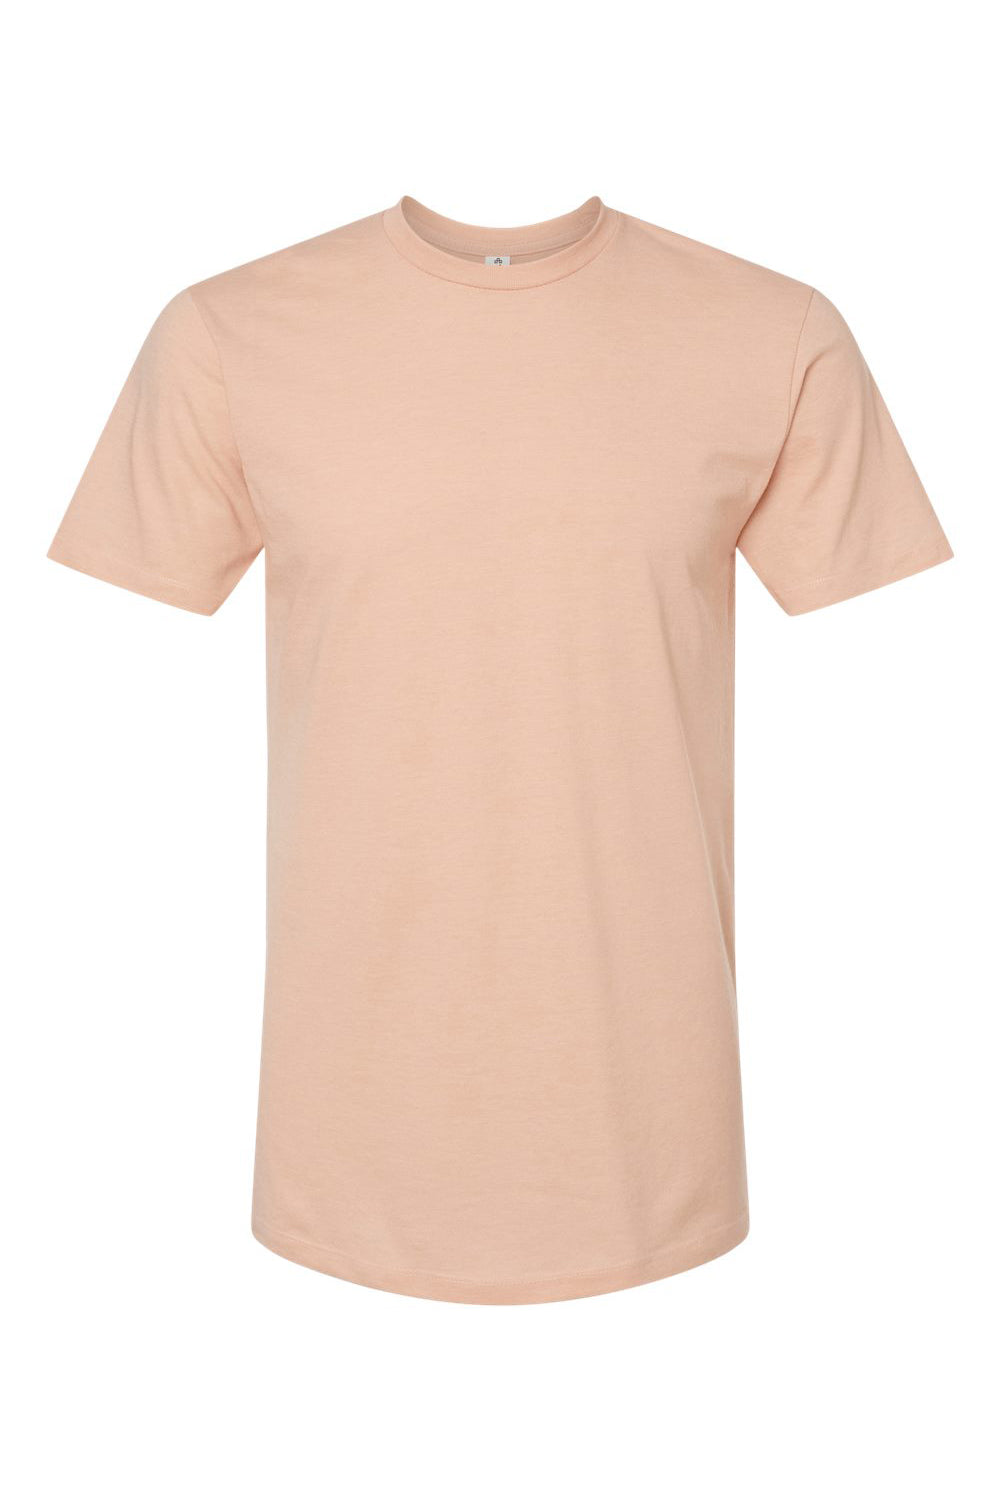 Tultex 541 Mens Premium Short Sleeve Crewneck T-Shirt Heather Peach Flat Front